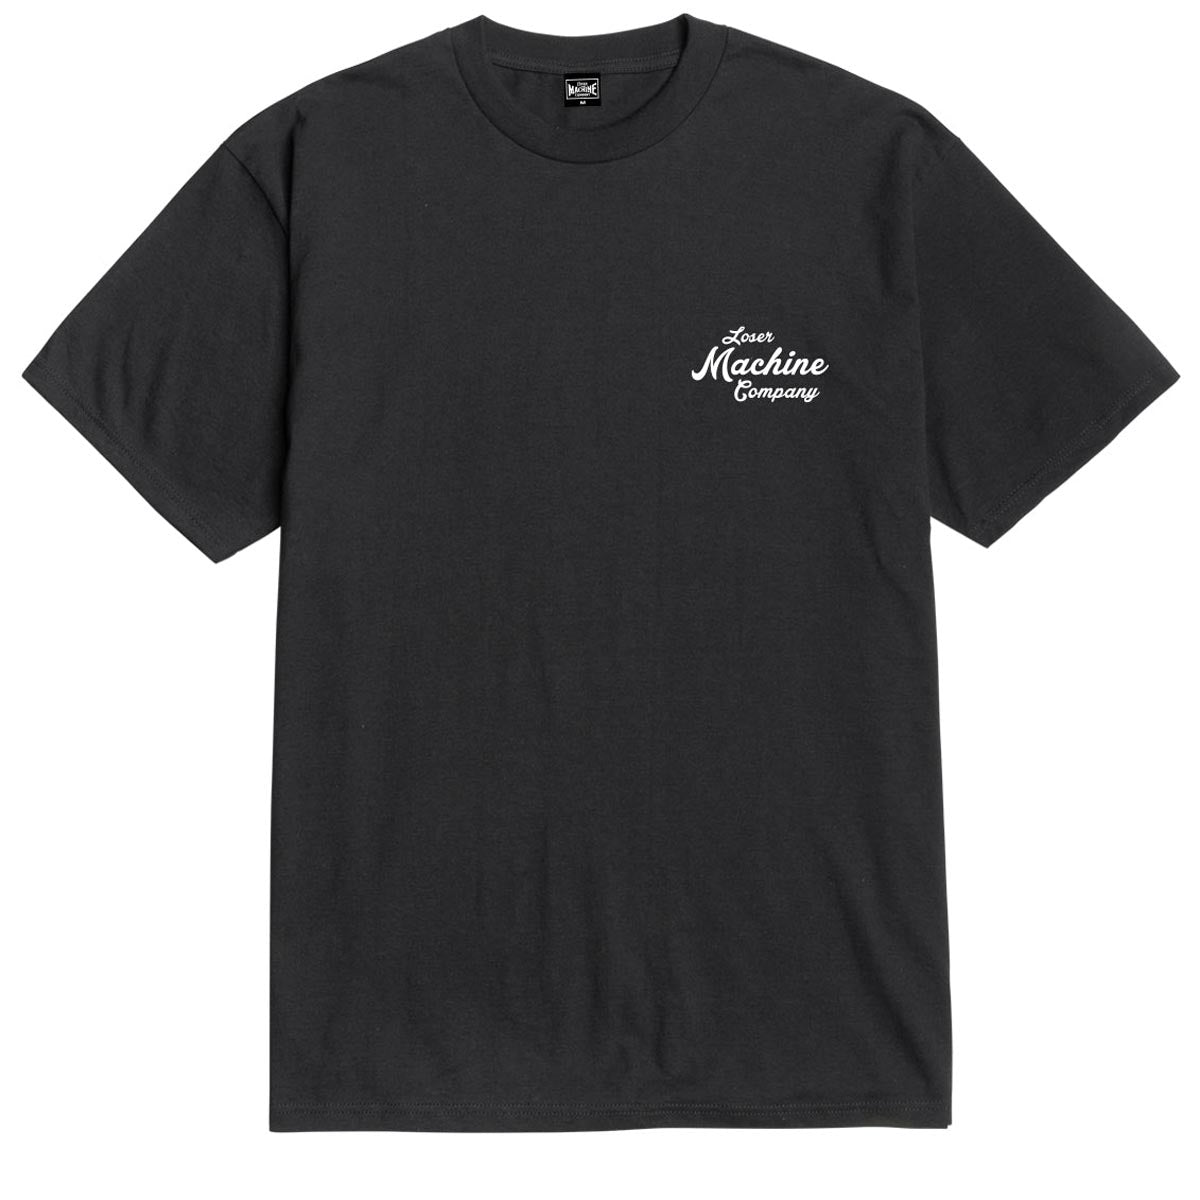 Loser Machine Fence Line T-Shirt - Black image 2